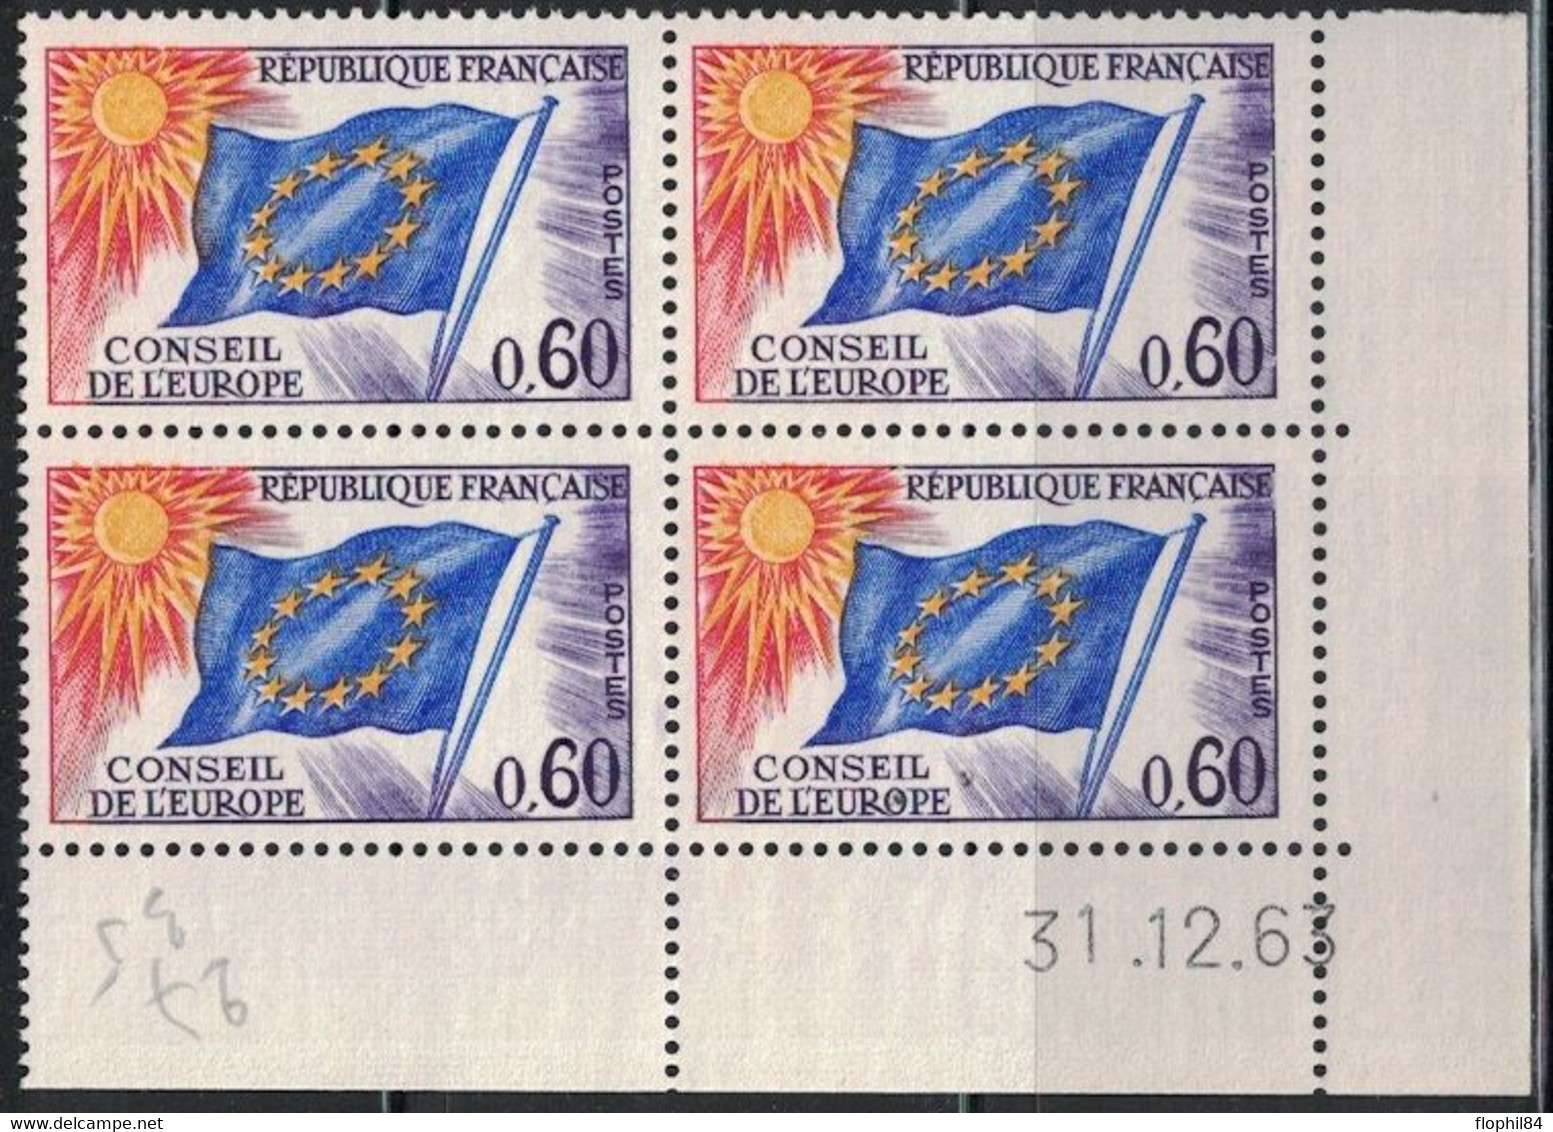 COIN DATE - SERVICE N°34 - 0f60 - CONSEIL DE L'EUROPE - 31-12-1963 - Cote 7€50. - Dienstmarken